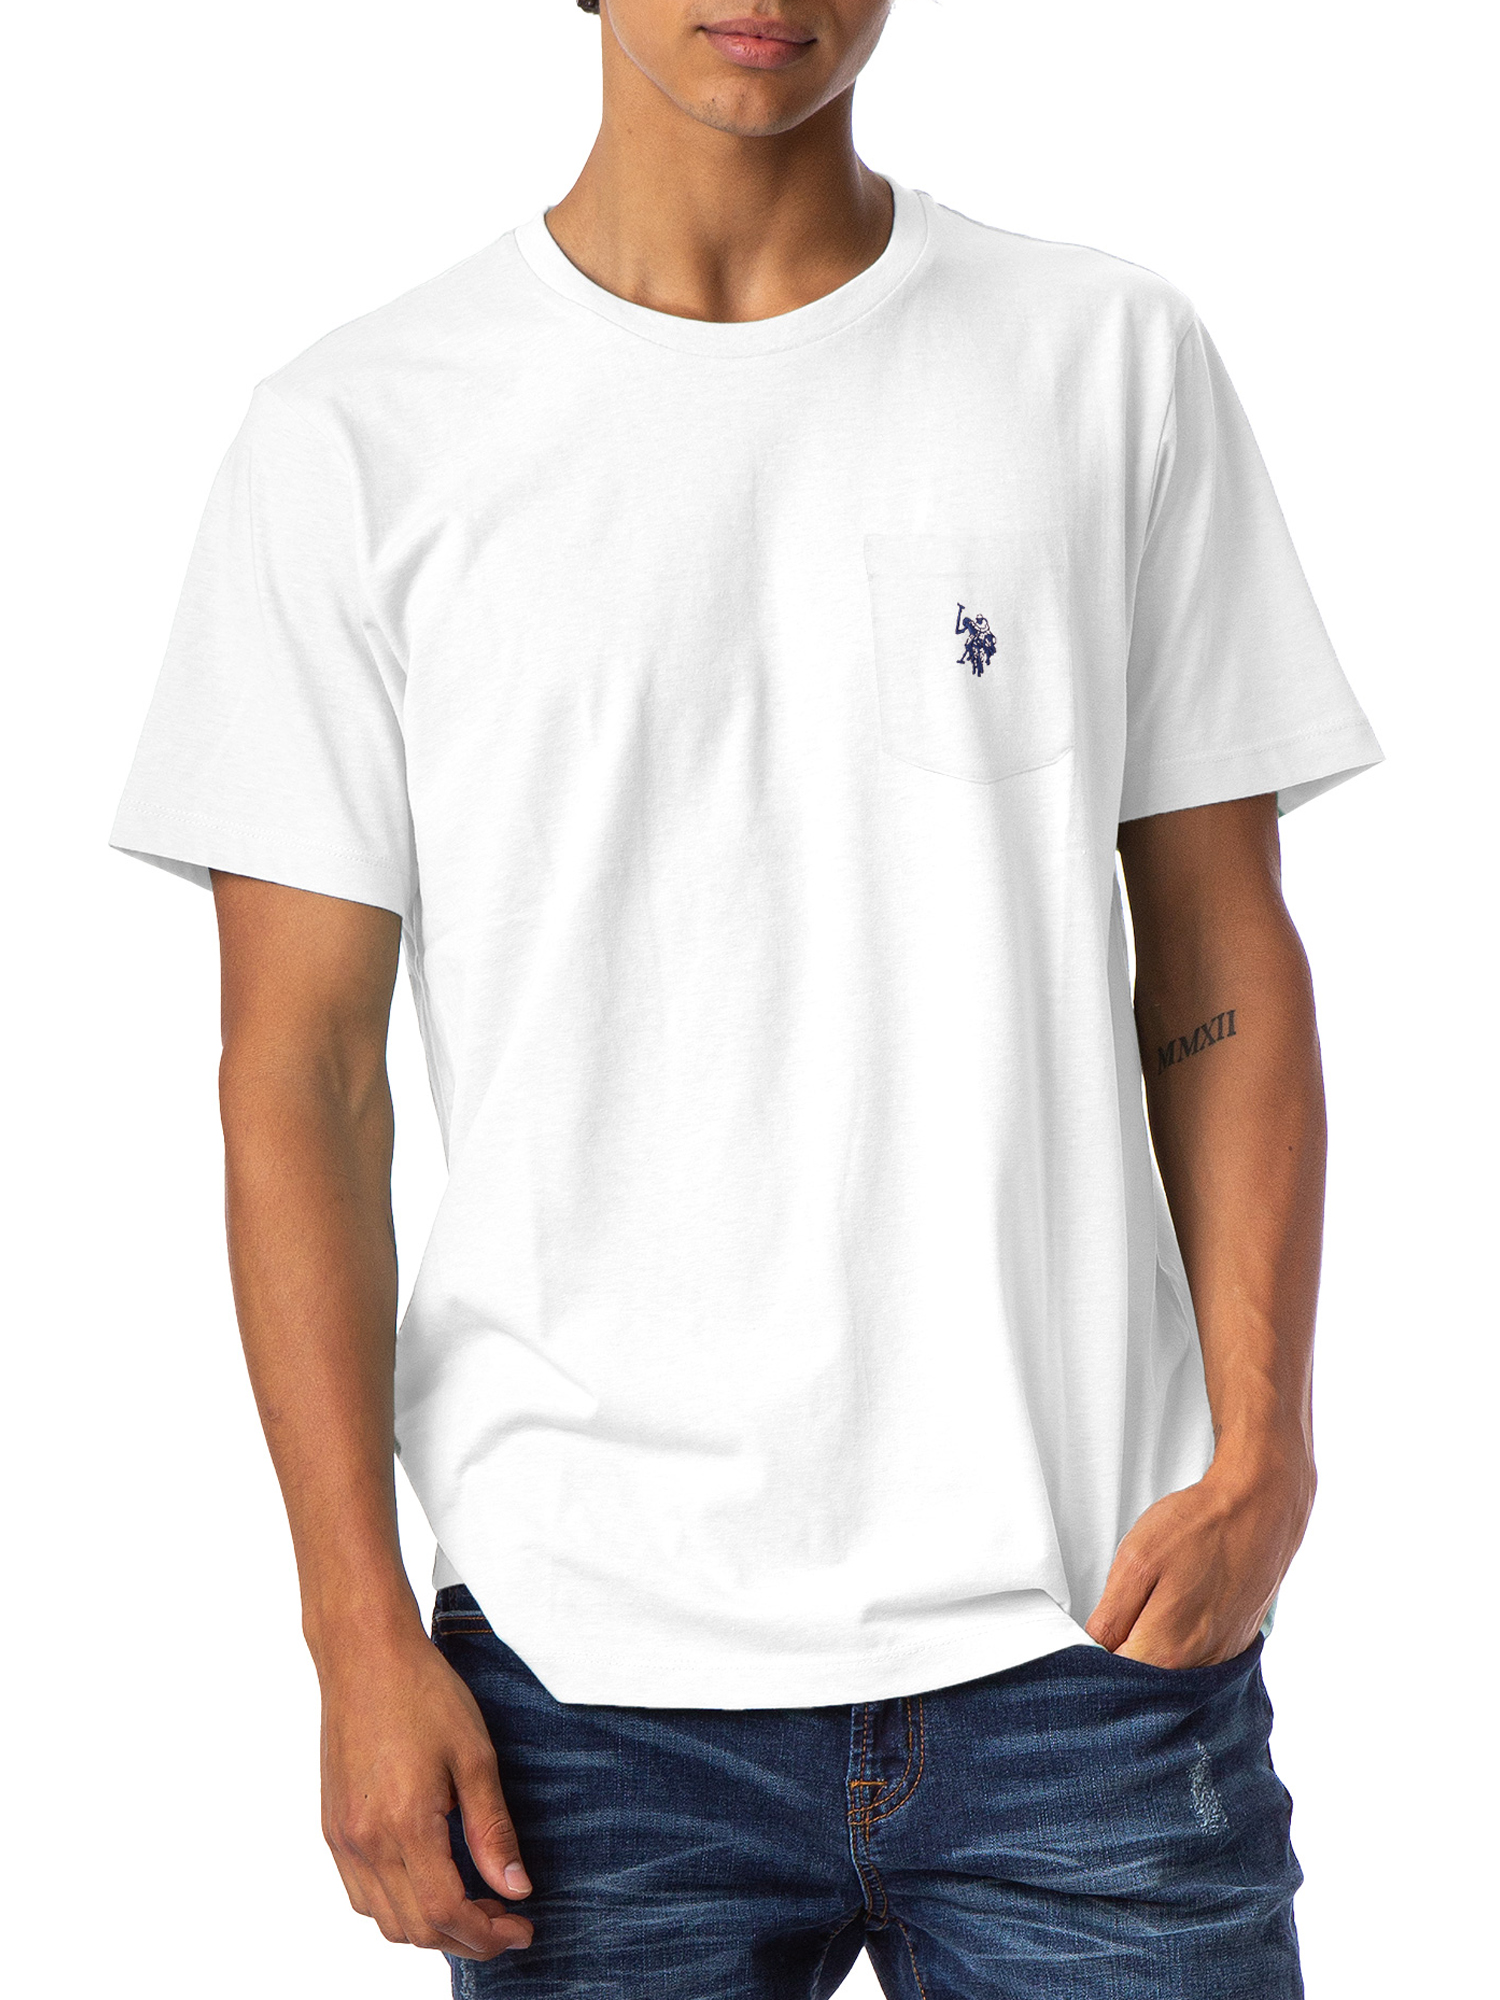 U.S. Polo Assn. Men's Crew Neck Pocket T-Shirt - image 1 of 2